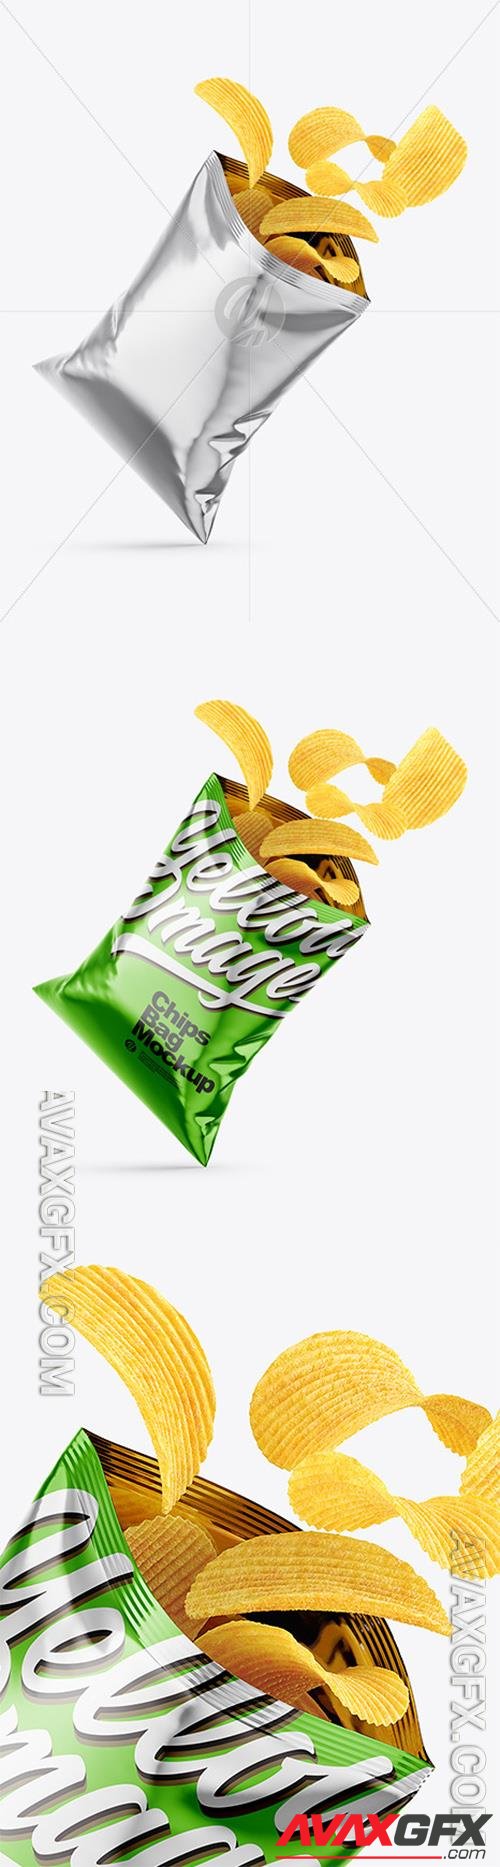 Opened Metallic Bag With Riffled Potato Chips Mockup 82733 TIF